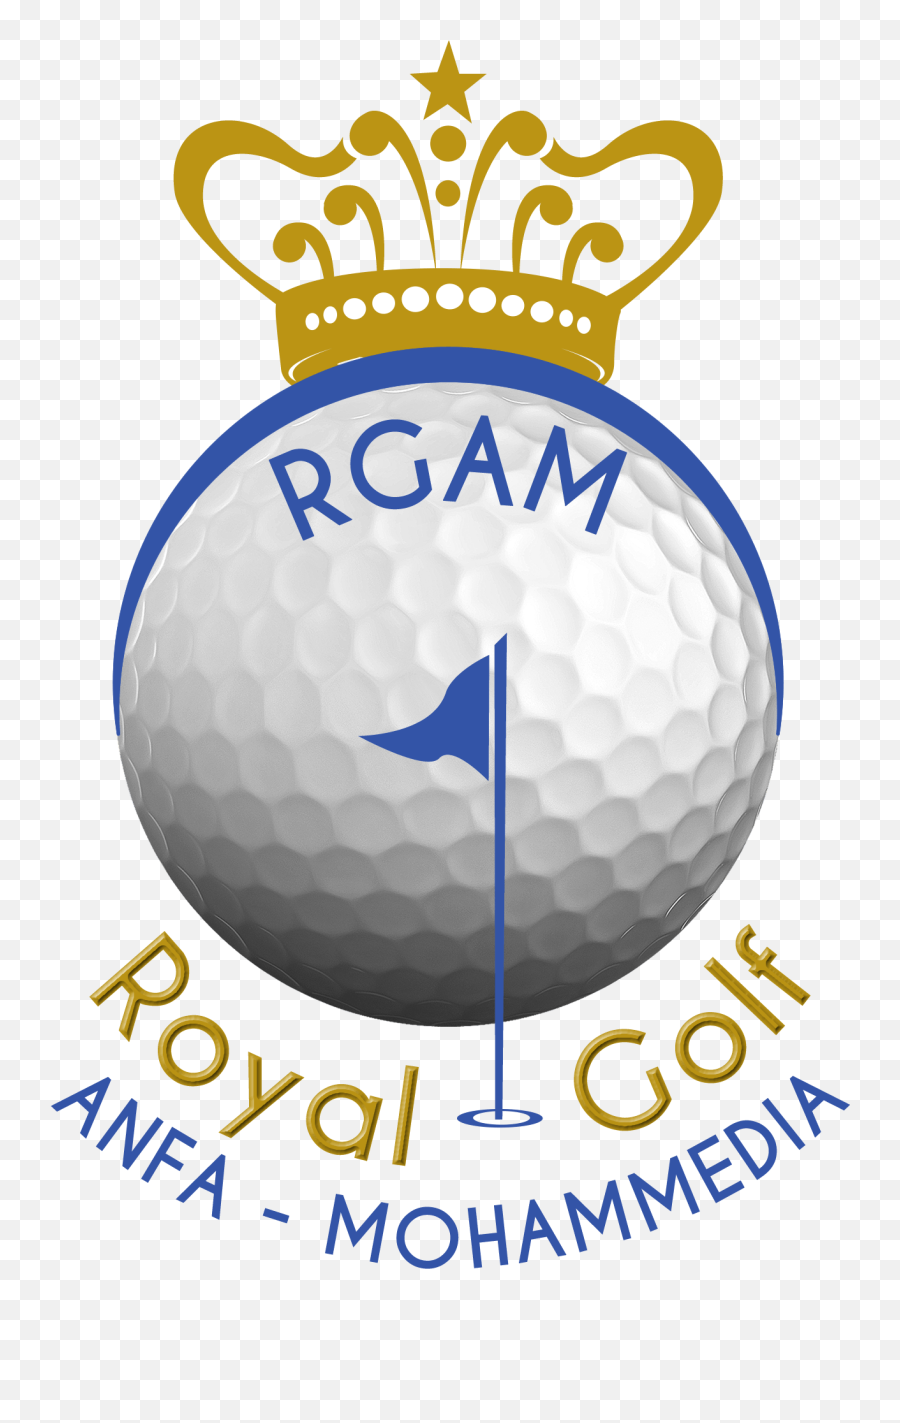 Royal Golf Anfa Mohammedia - Royal Golf Anfa Mohammedia Emoji,Funny Golf Emoji